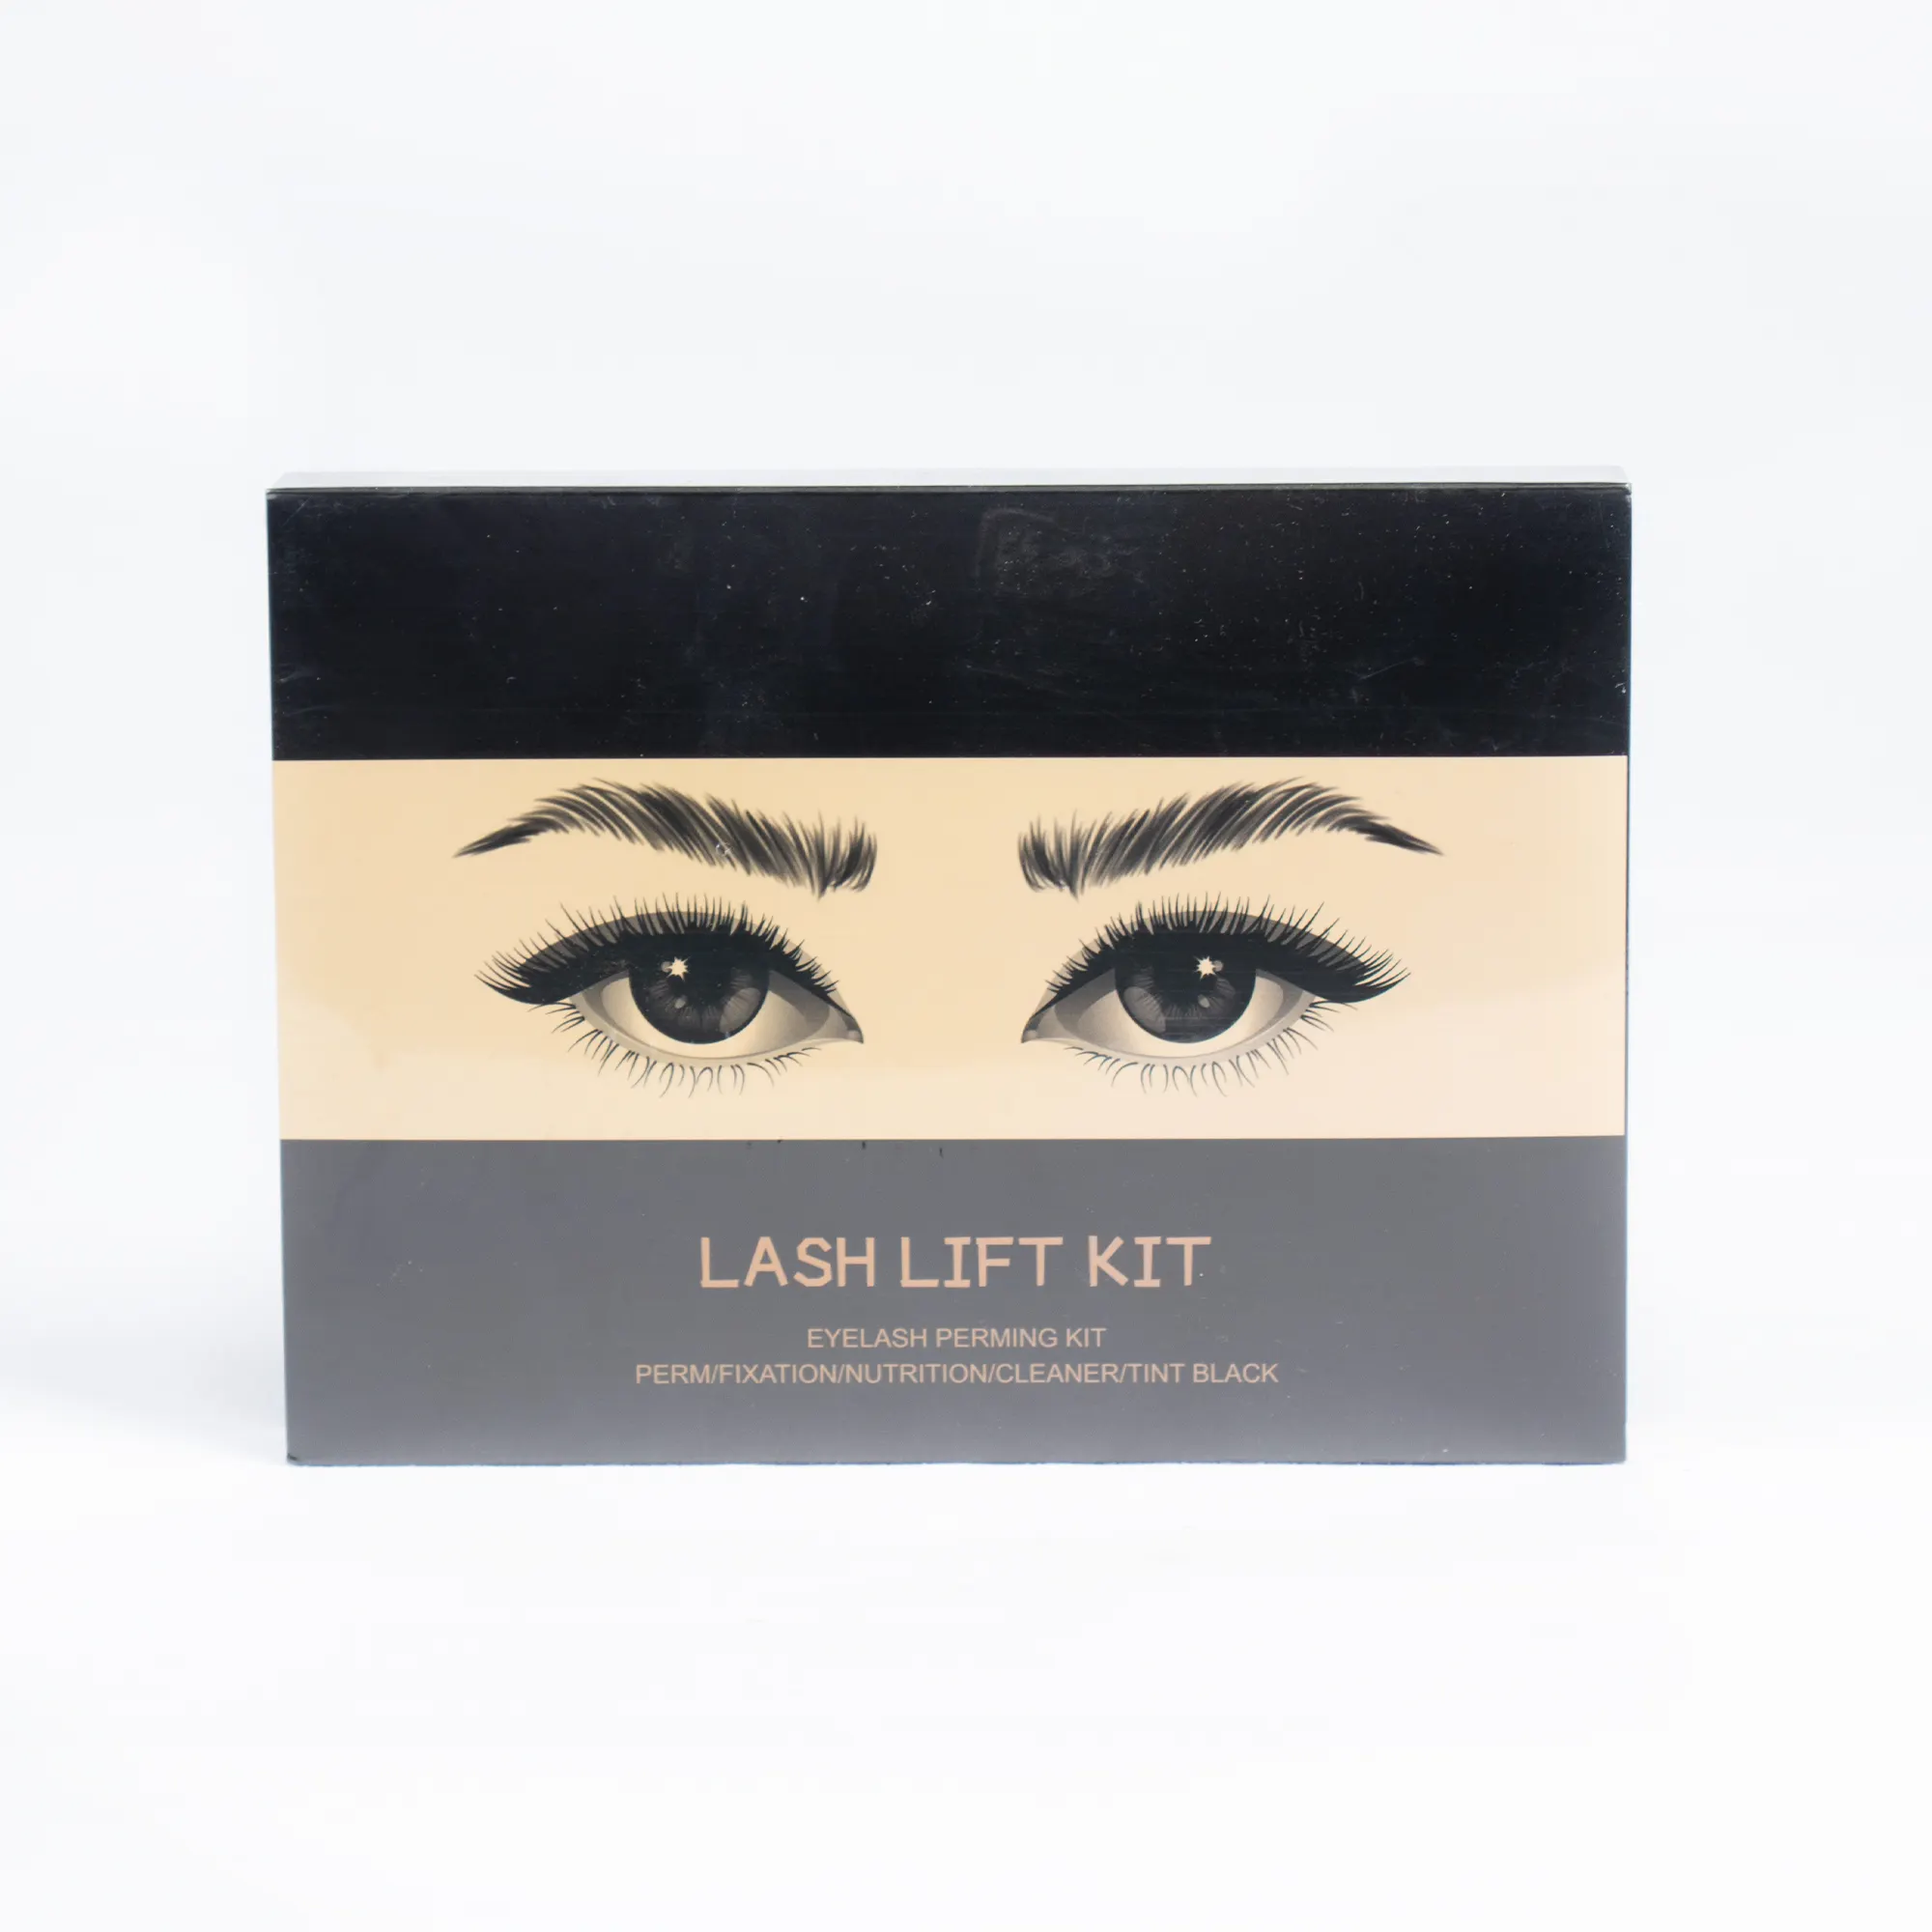 Fast Brow Lamination and Lash Lift Kit 2 in 1 Eyelash Lifting and Perming Tools Set Black Box or Customized Inice or Custom